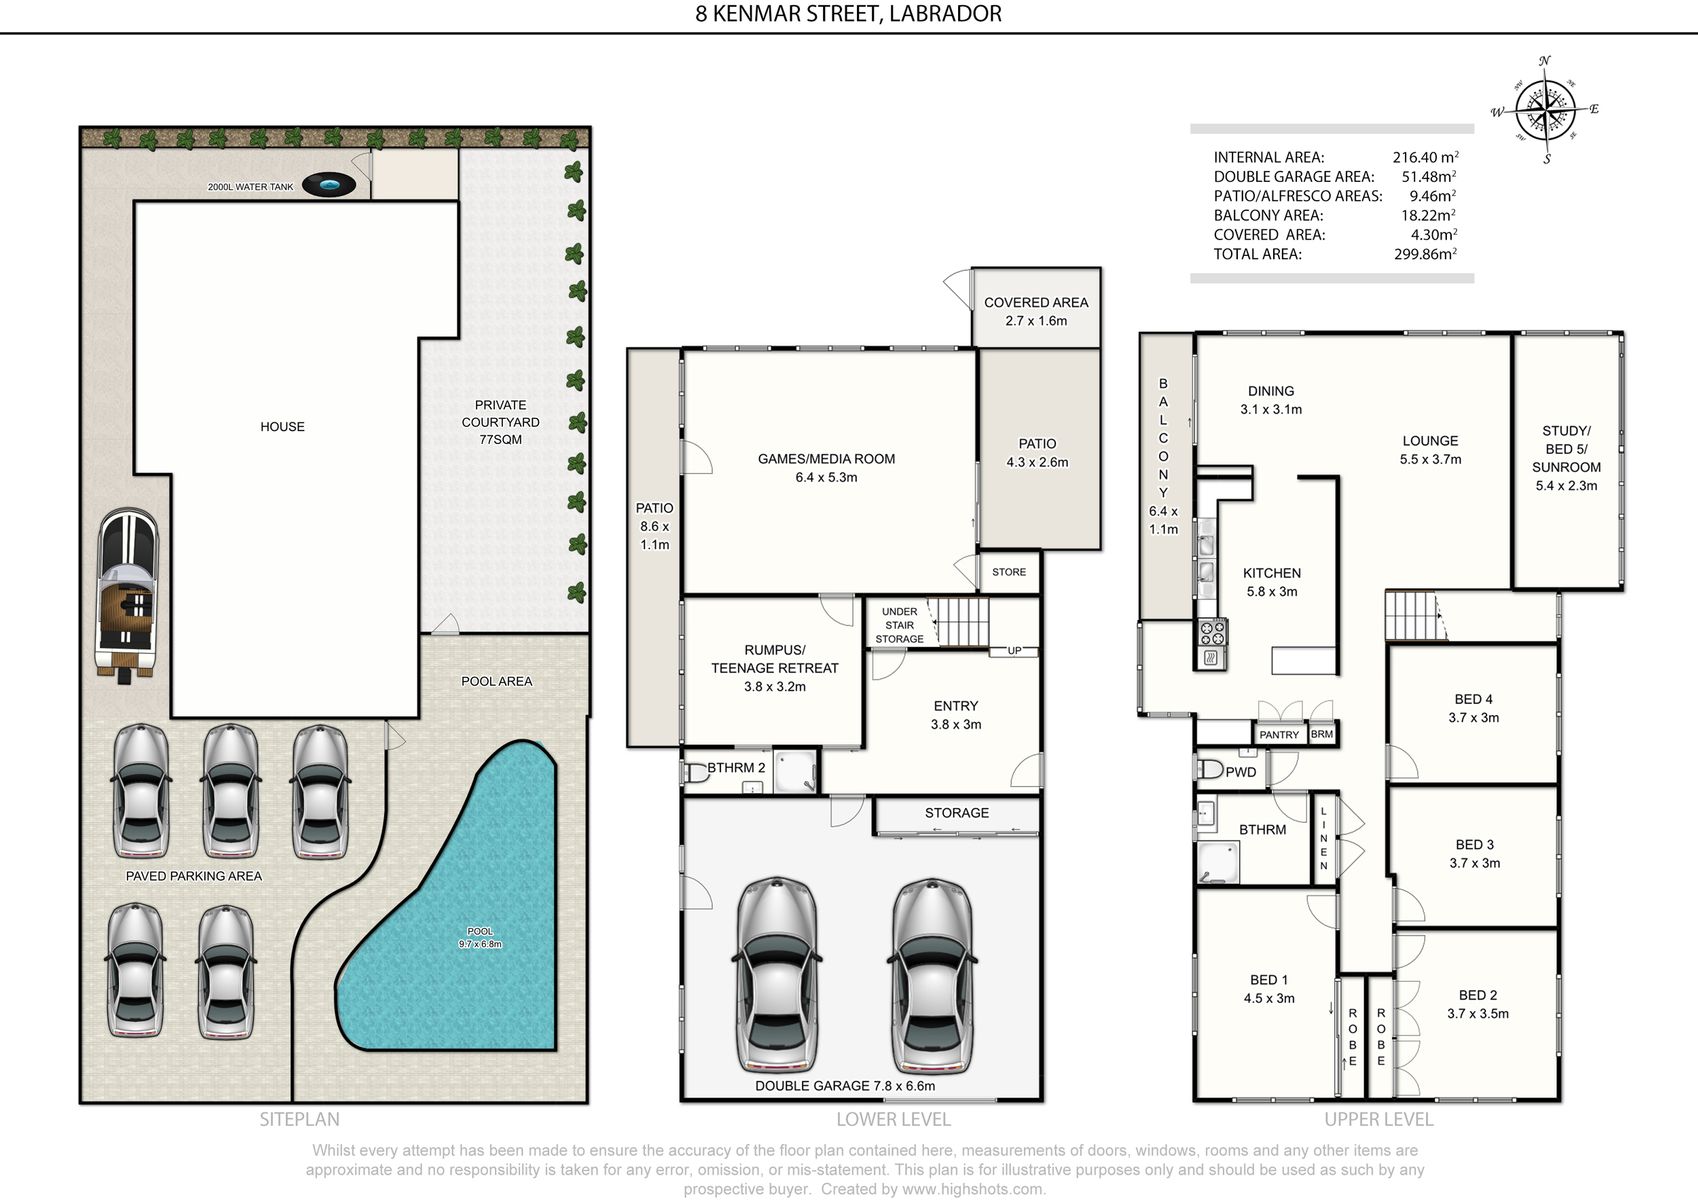 8 Kenmar St, Labrador Floor Plan